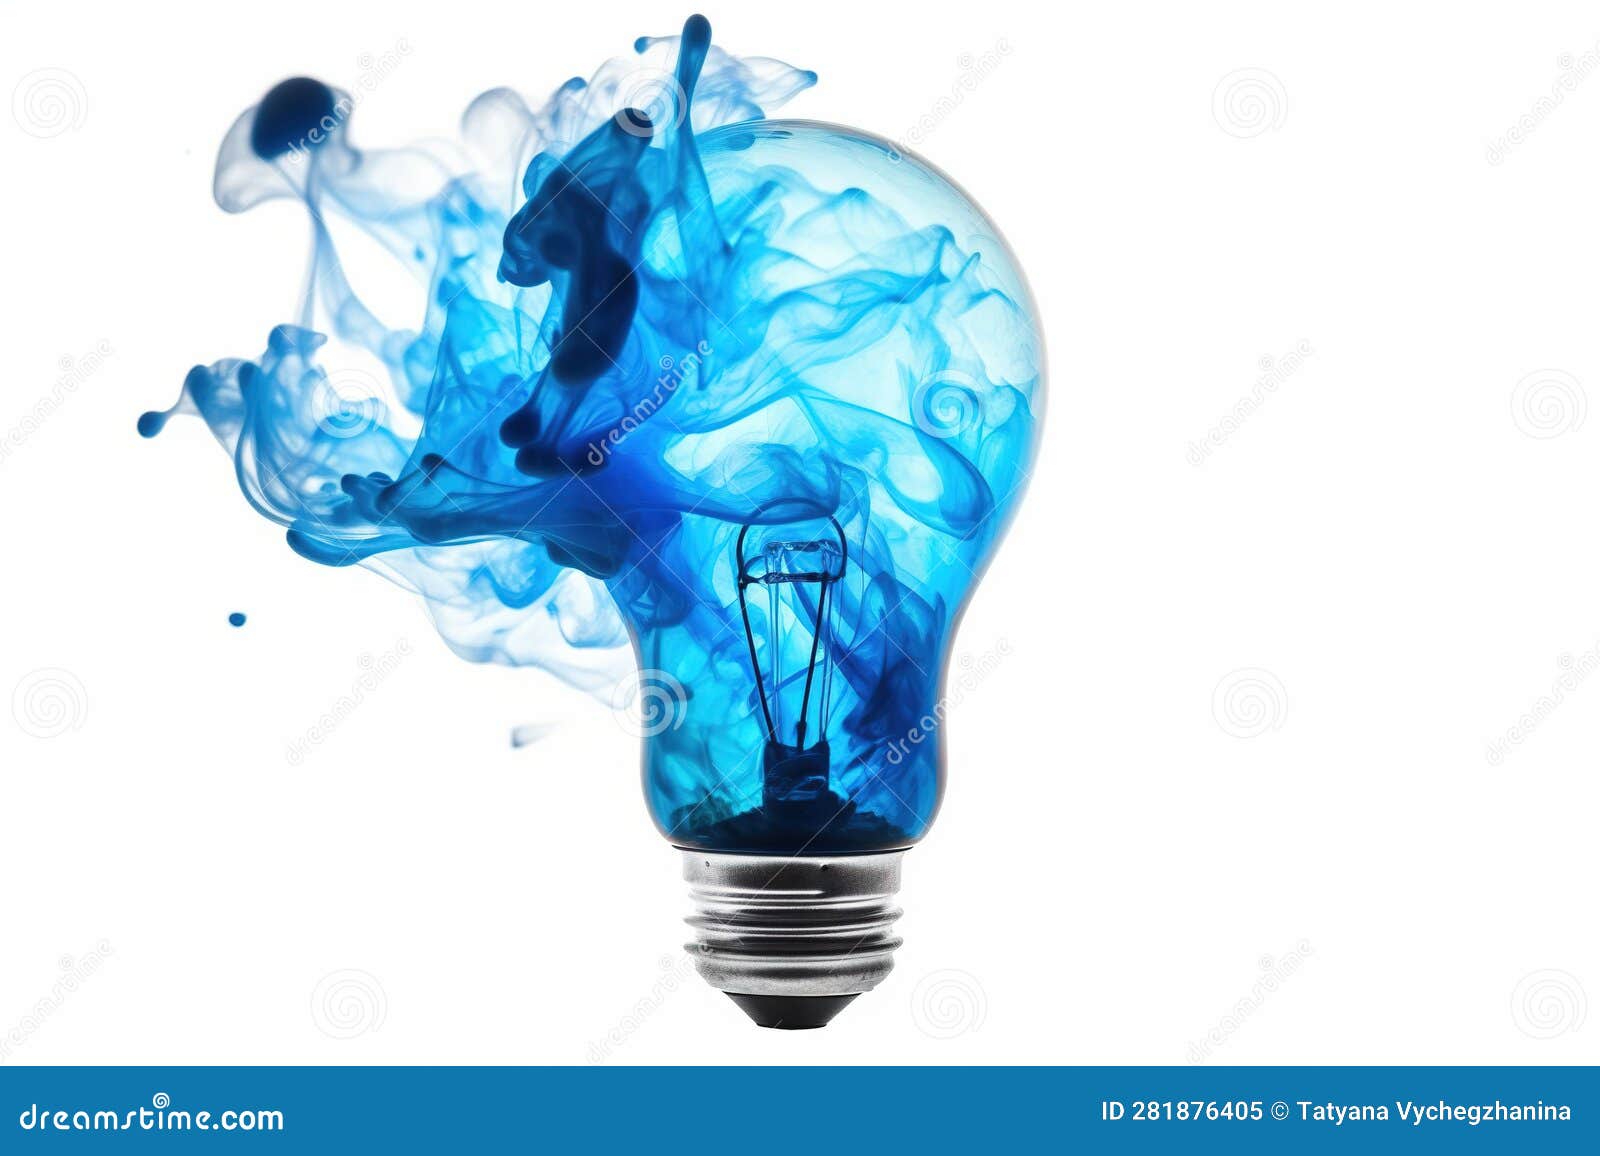 blew up light bulb with a dark blue smoke inside